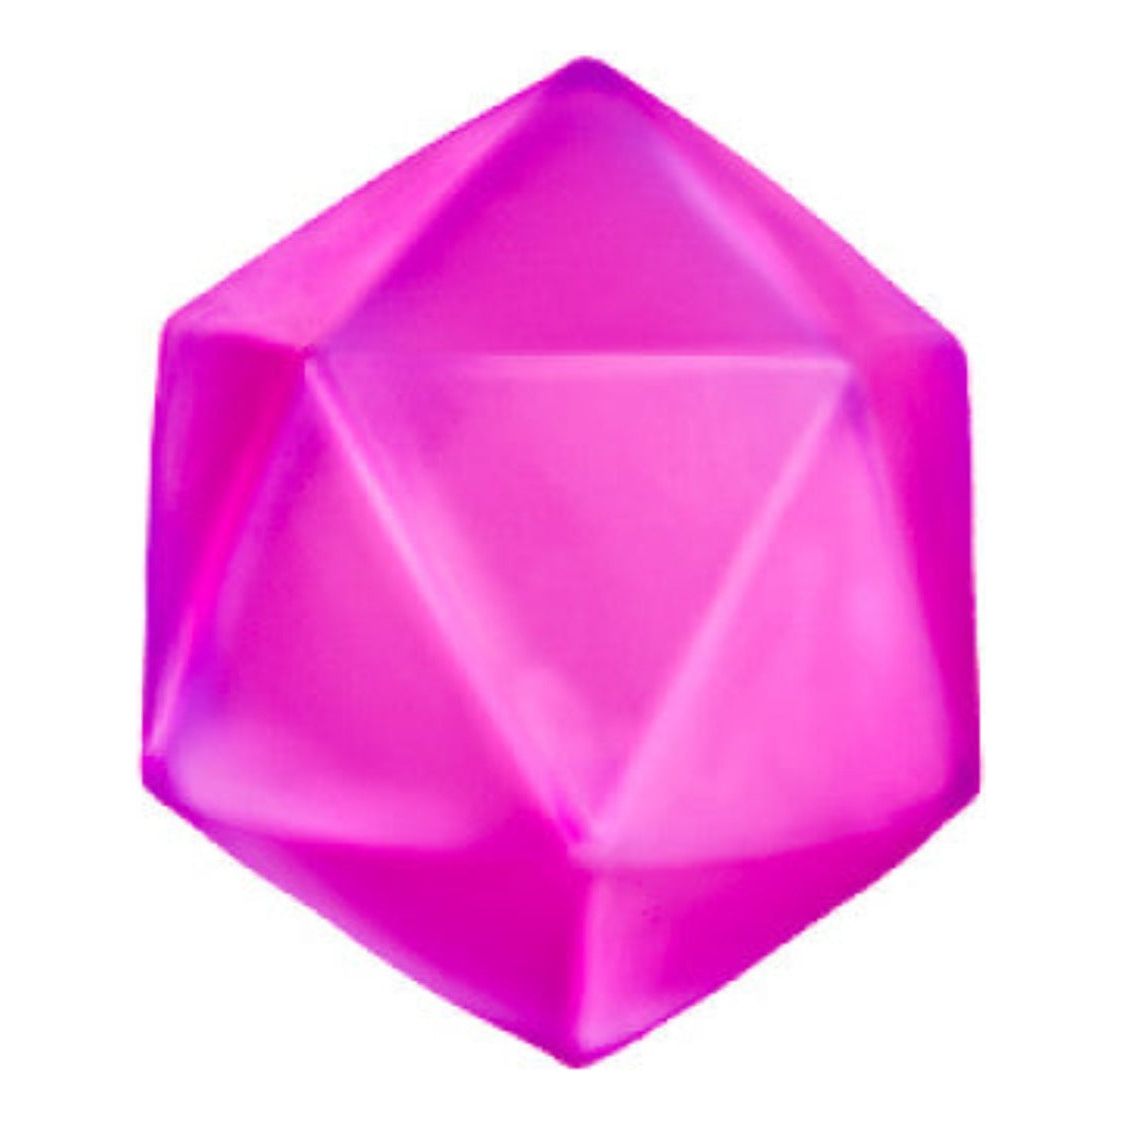 Smoosho's Polyhedron Jelly Cube - Sensory Circle